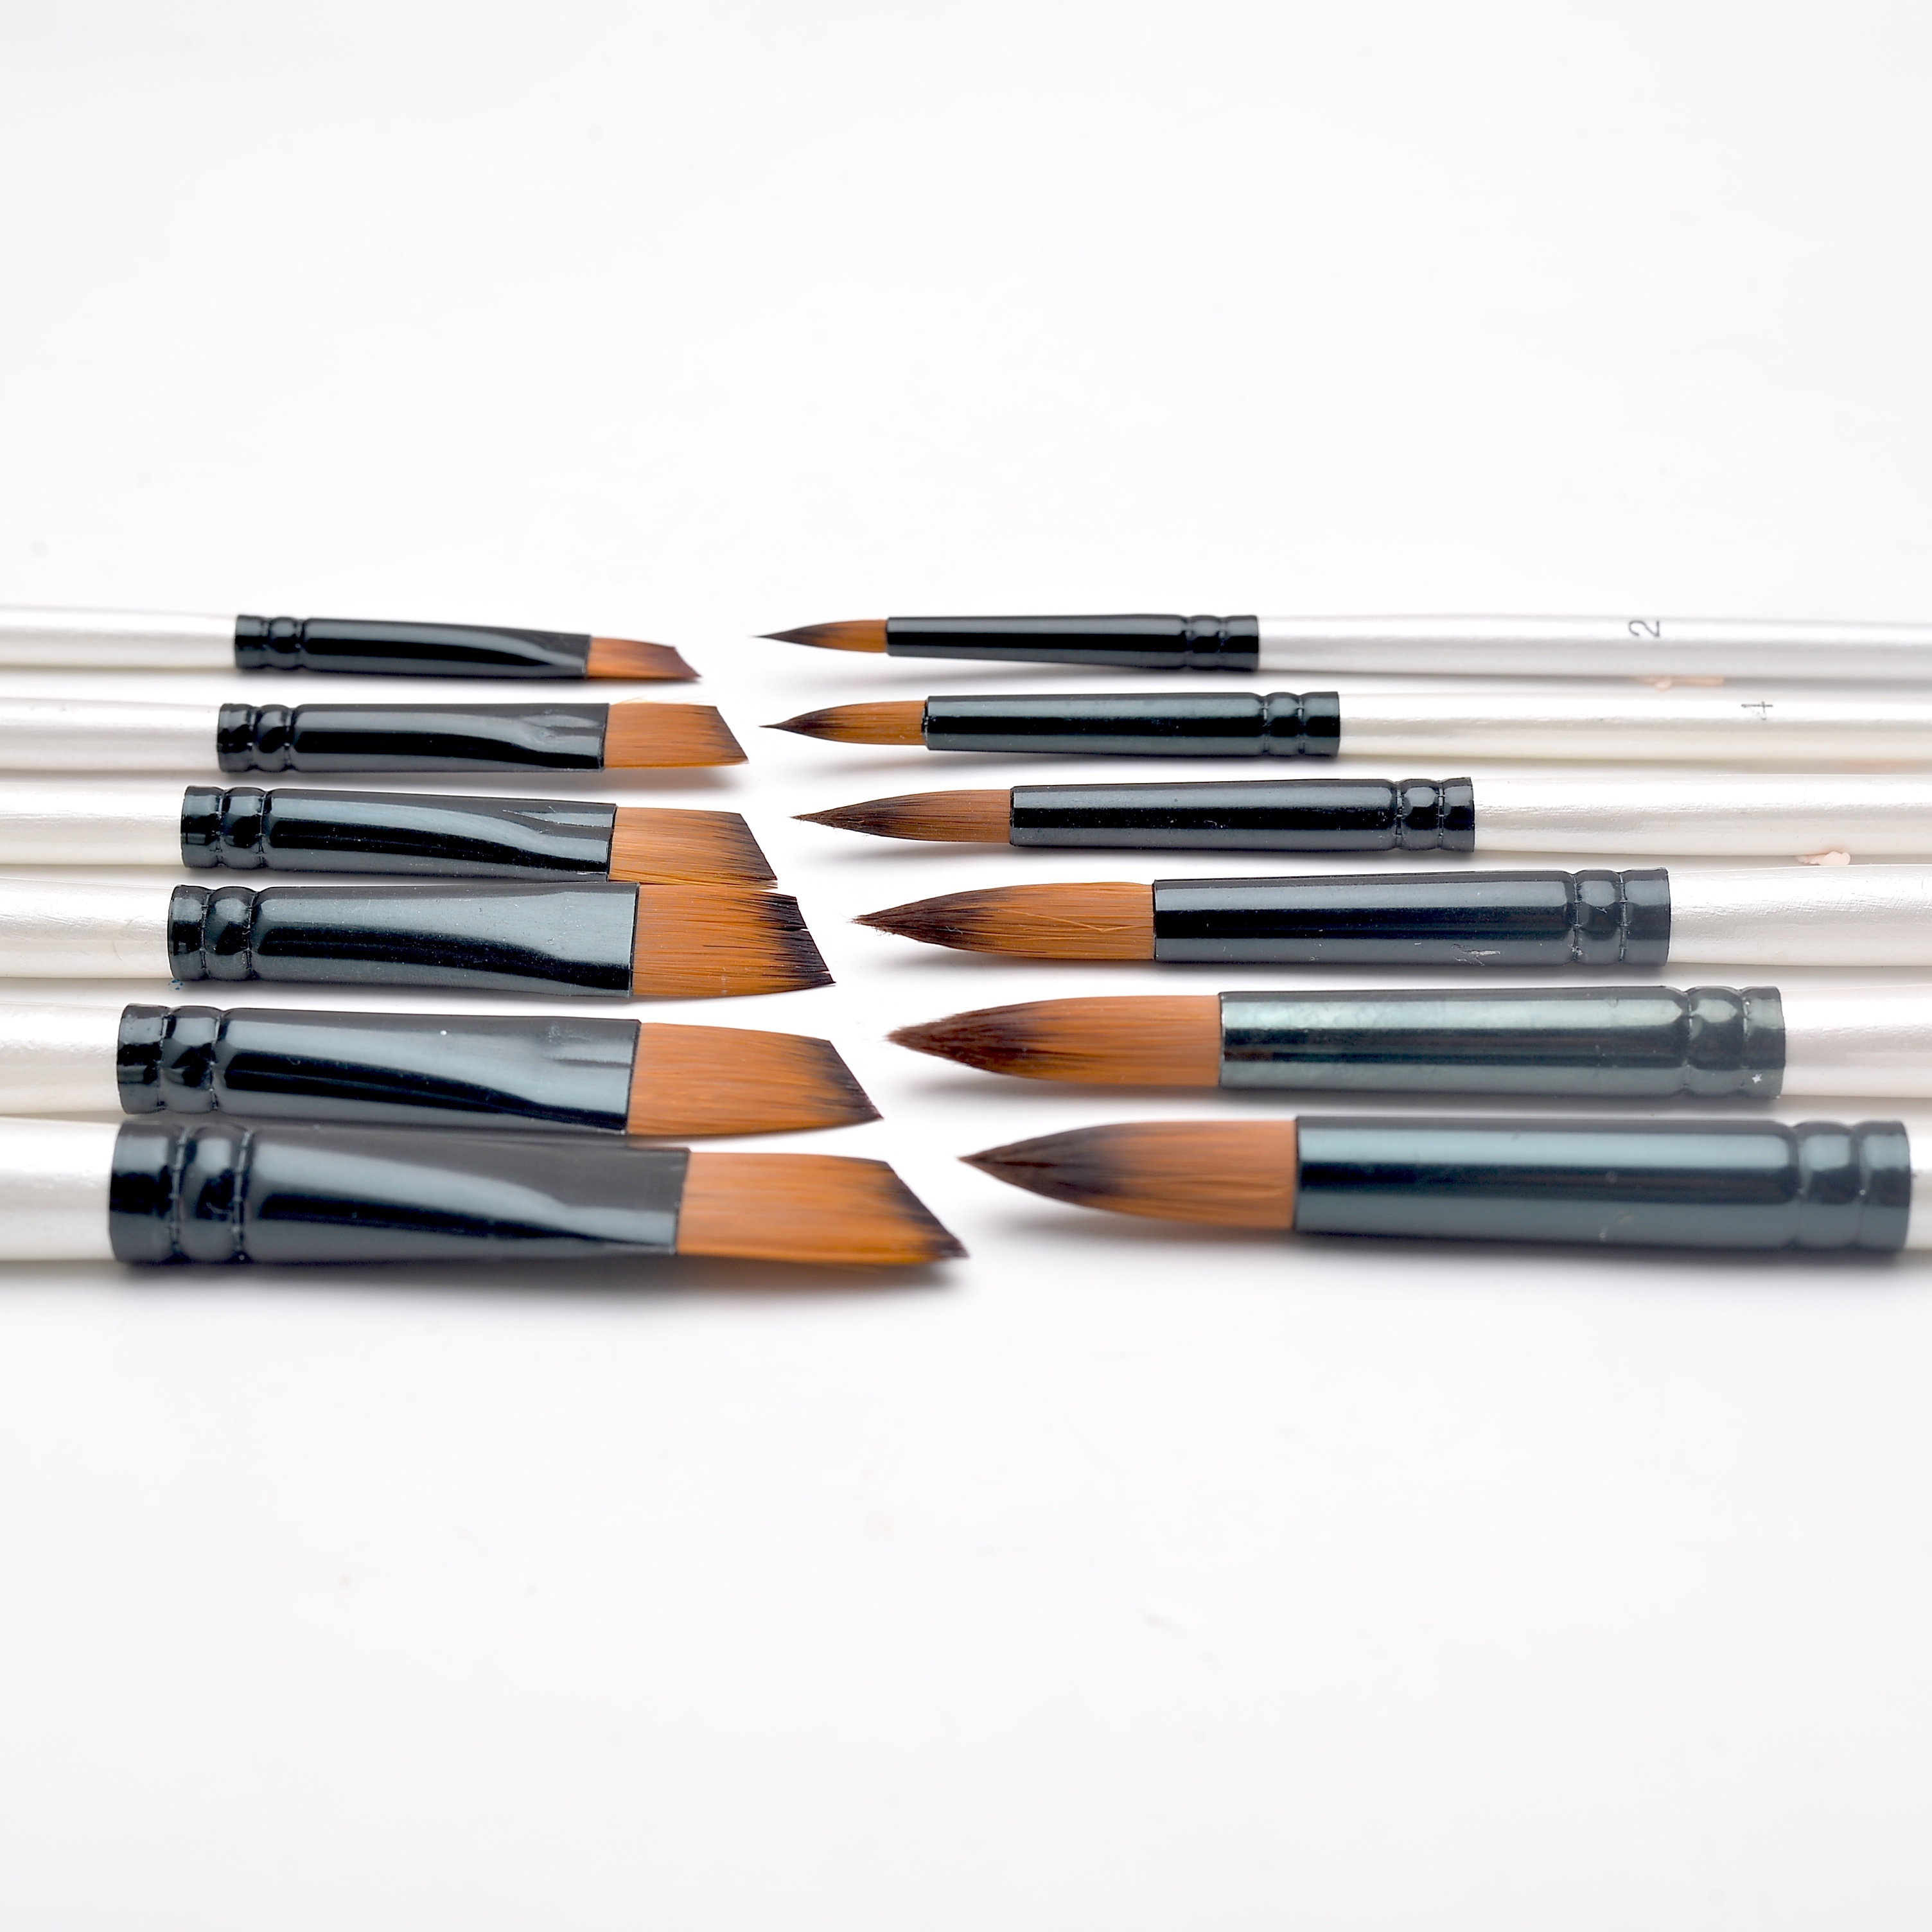 Art Brushes For Acrylic Painting With Short Handle Soft Nylon Hair Brushes